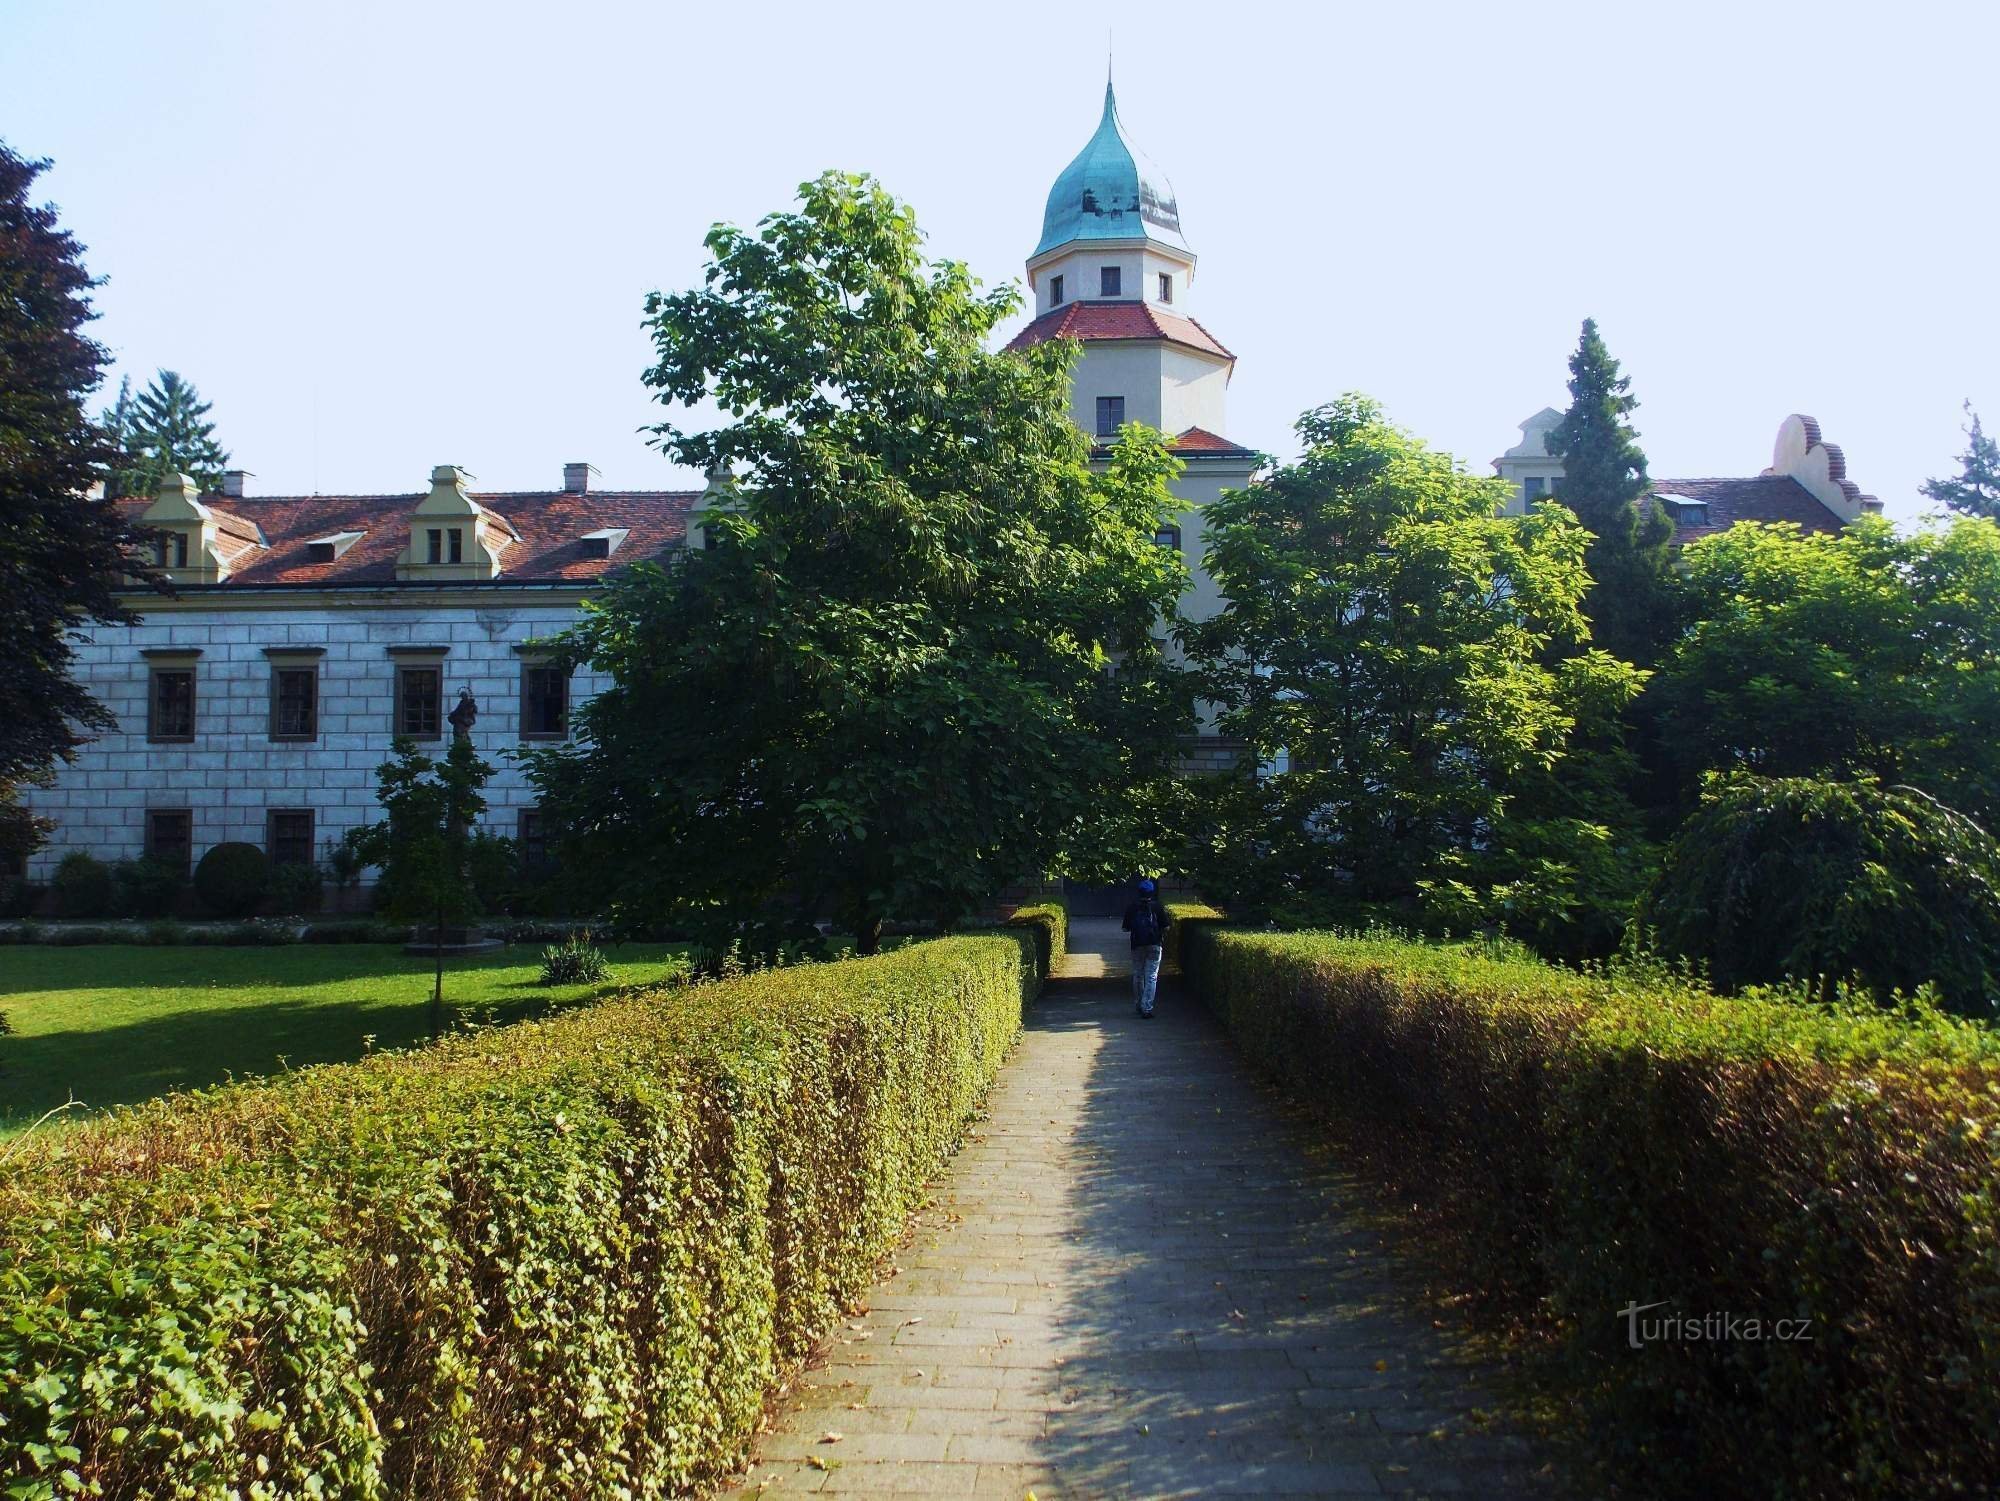 Ausflug in den Schlossgarten mit ZOO-Ecke in Častolovice